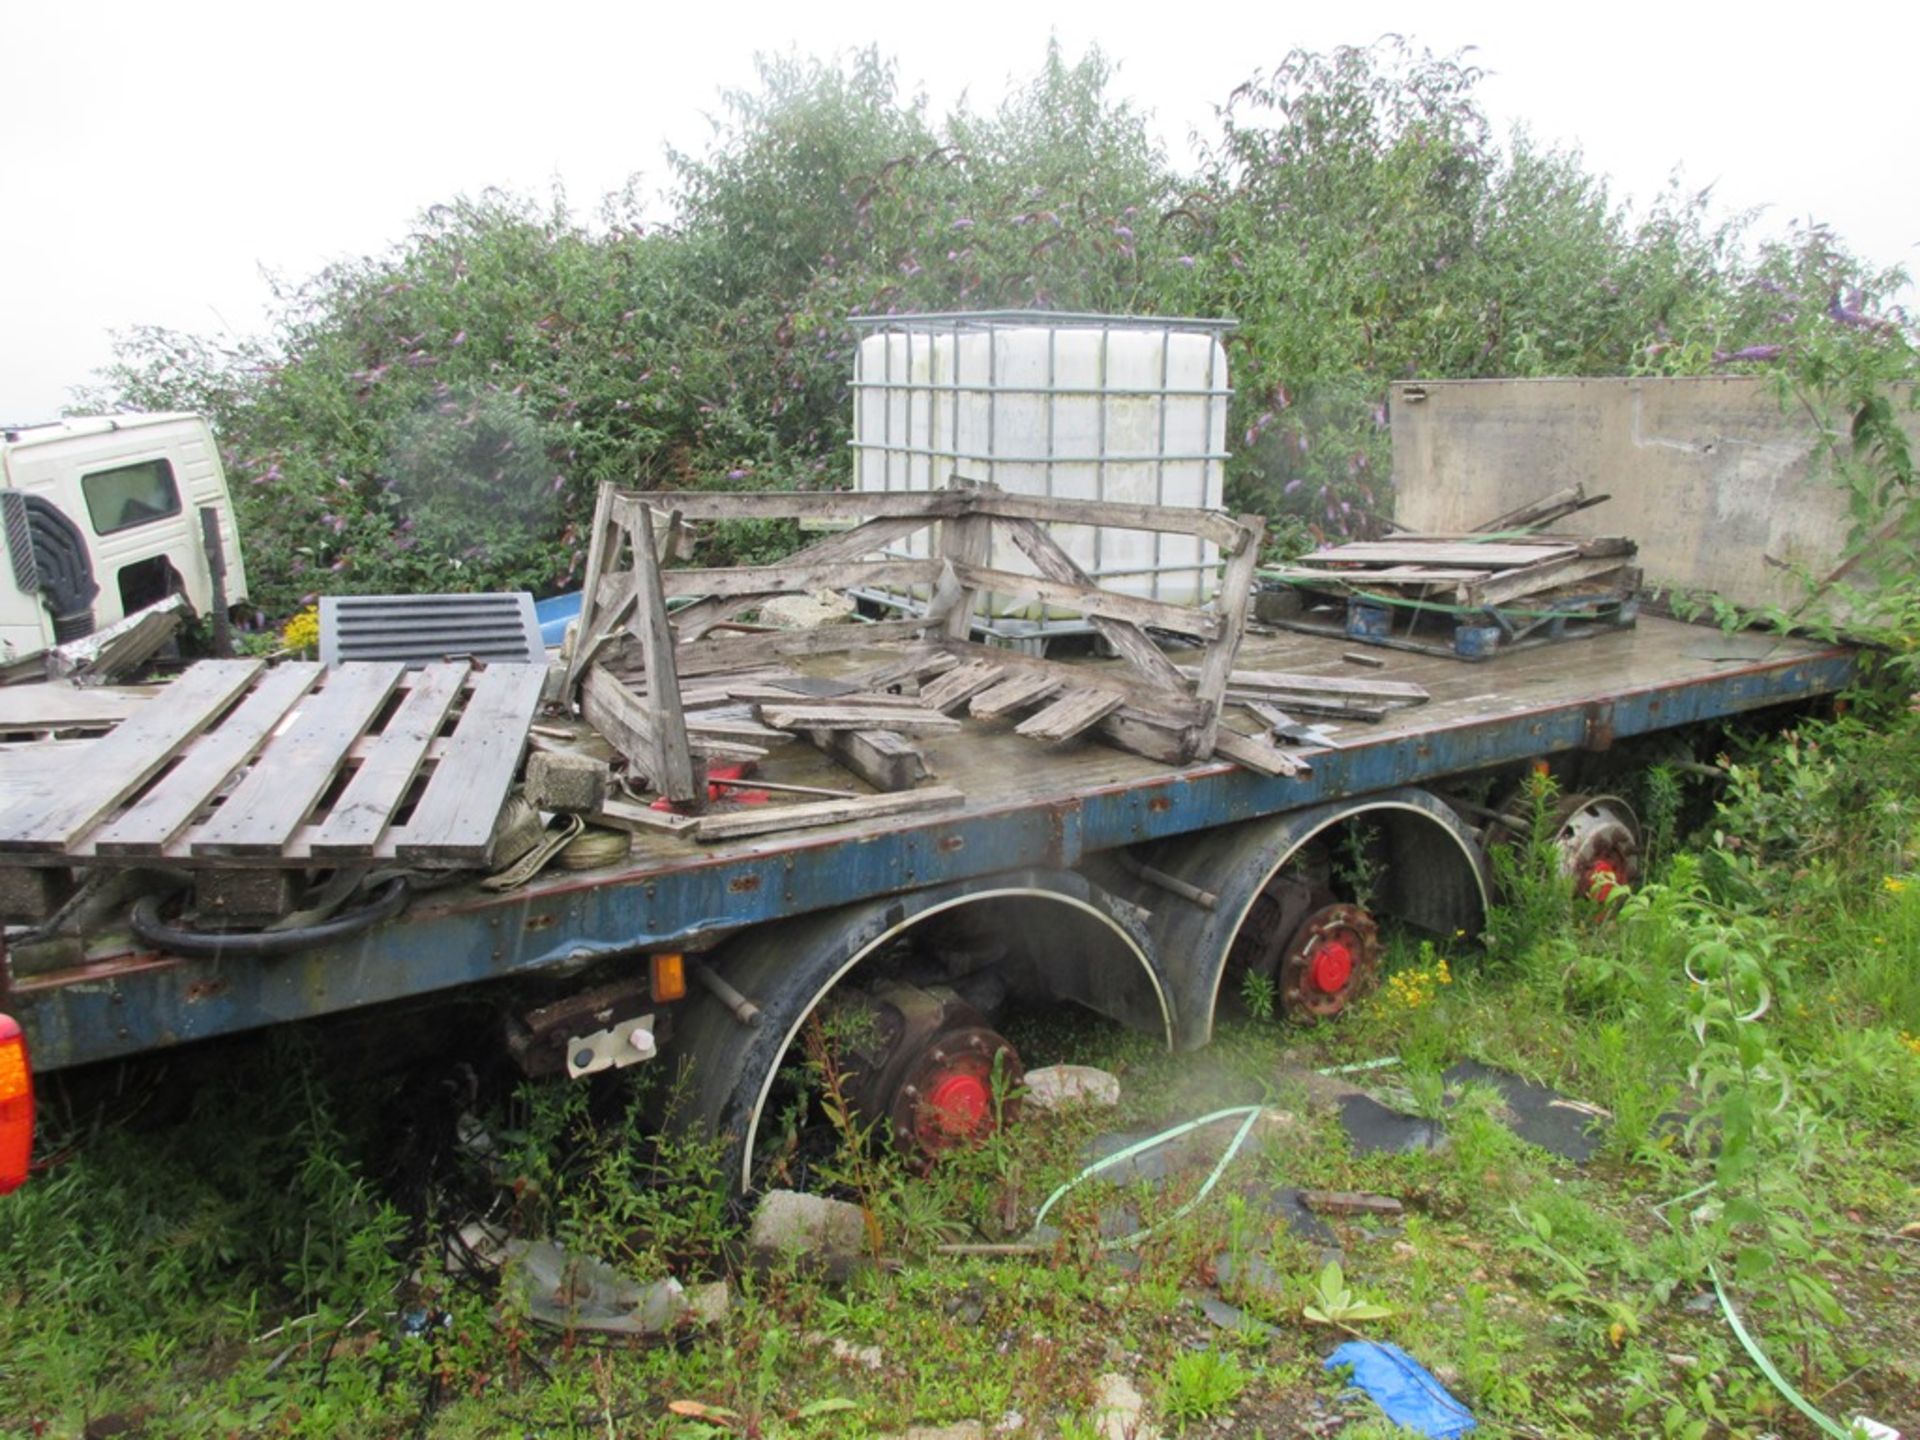 Abel tri-axle draw bar flat bed trailer - wheels missing - scrap only Located: Lantoon Farm,